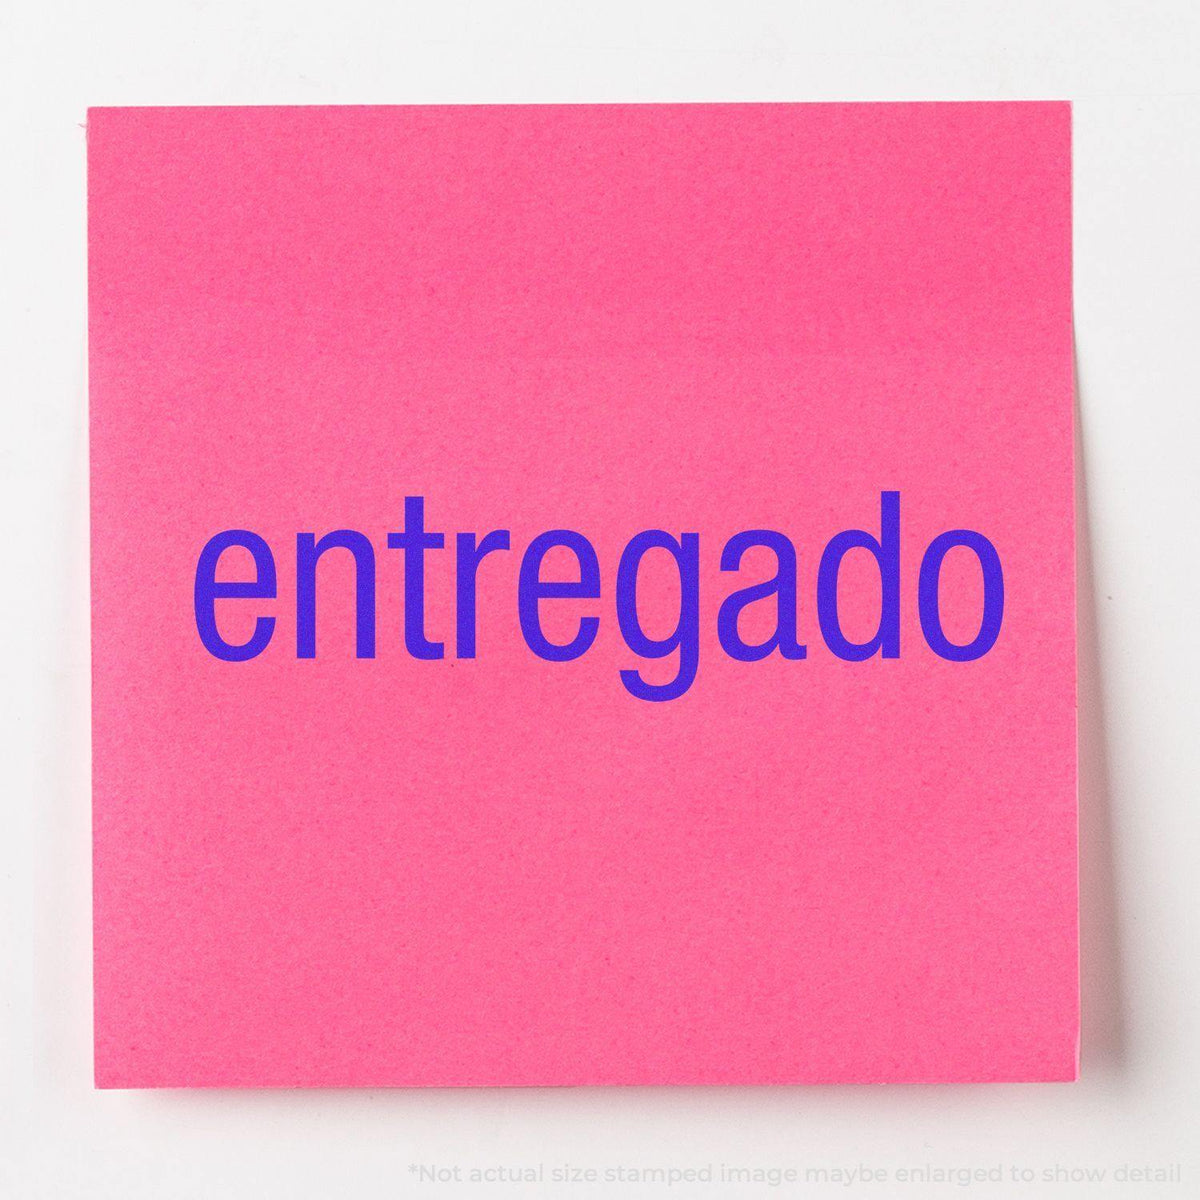 In Use Large Entregado Rubber Stamp Image